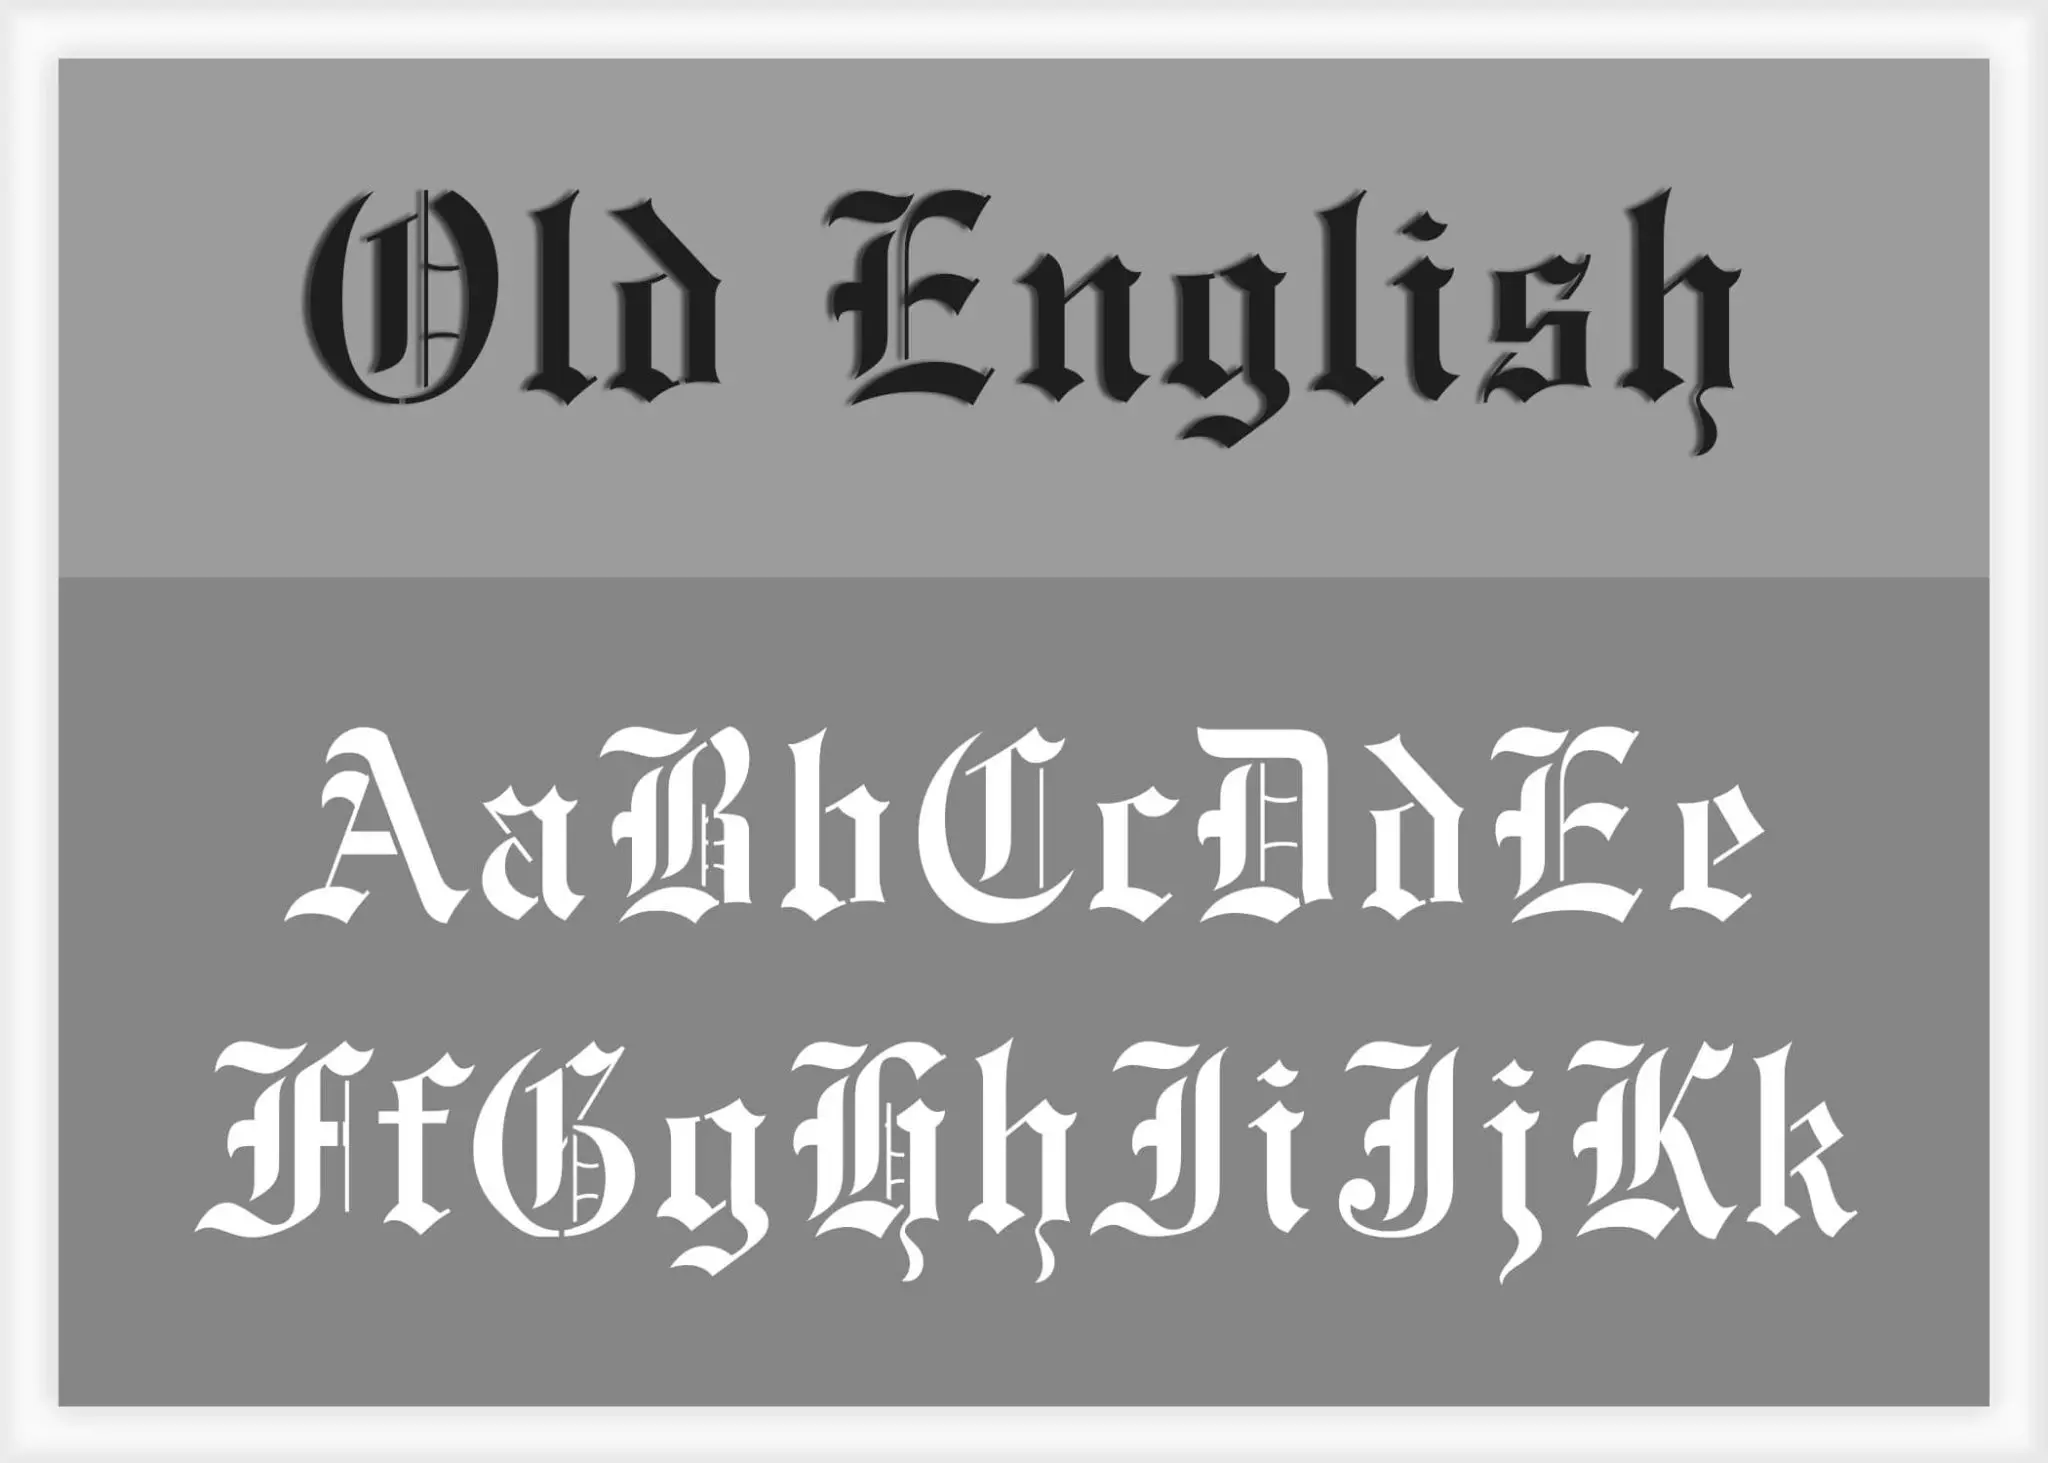 Old English Font Alphabet Stencil, Letter Stencils